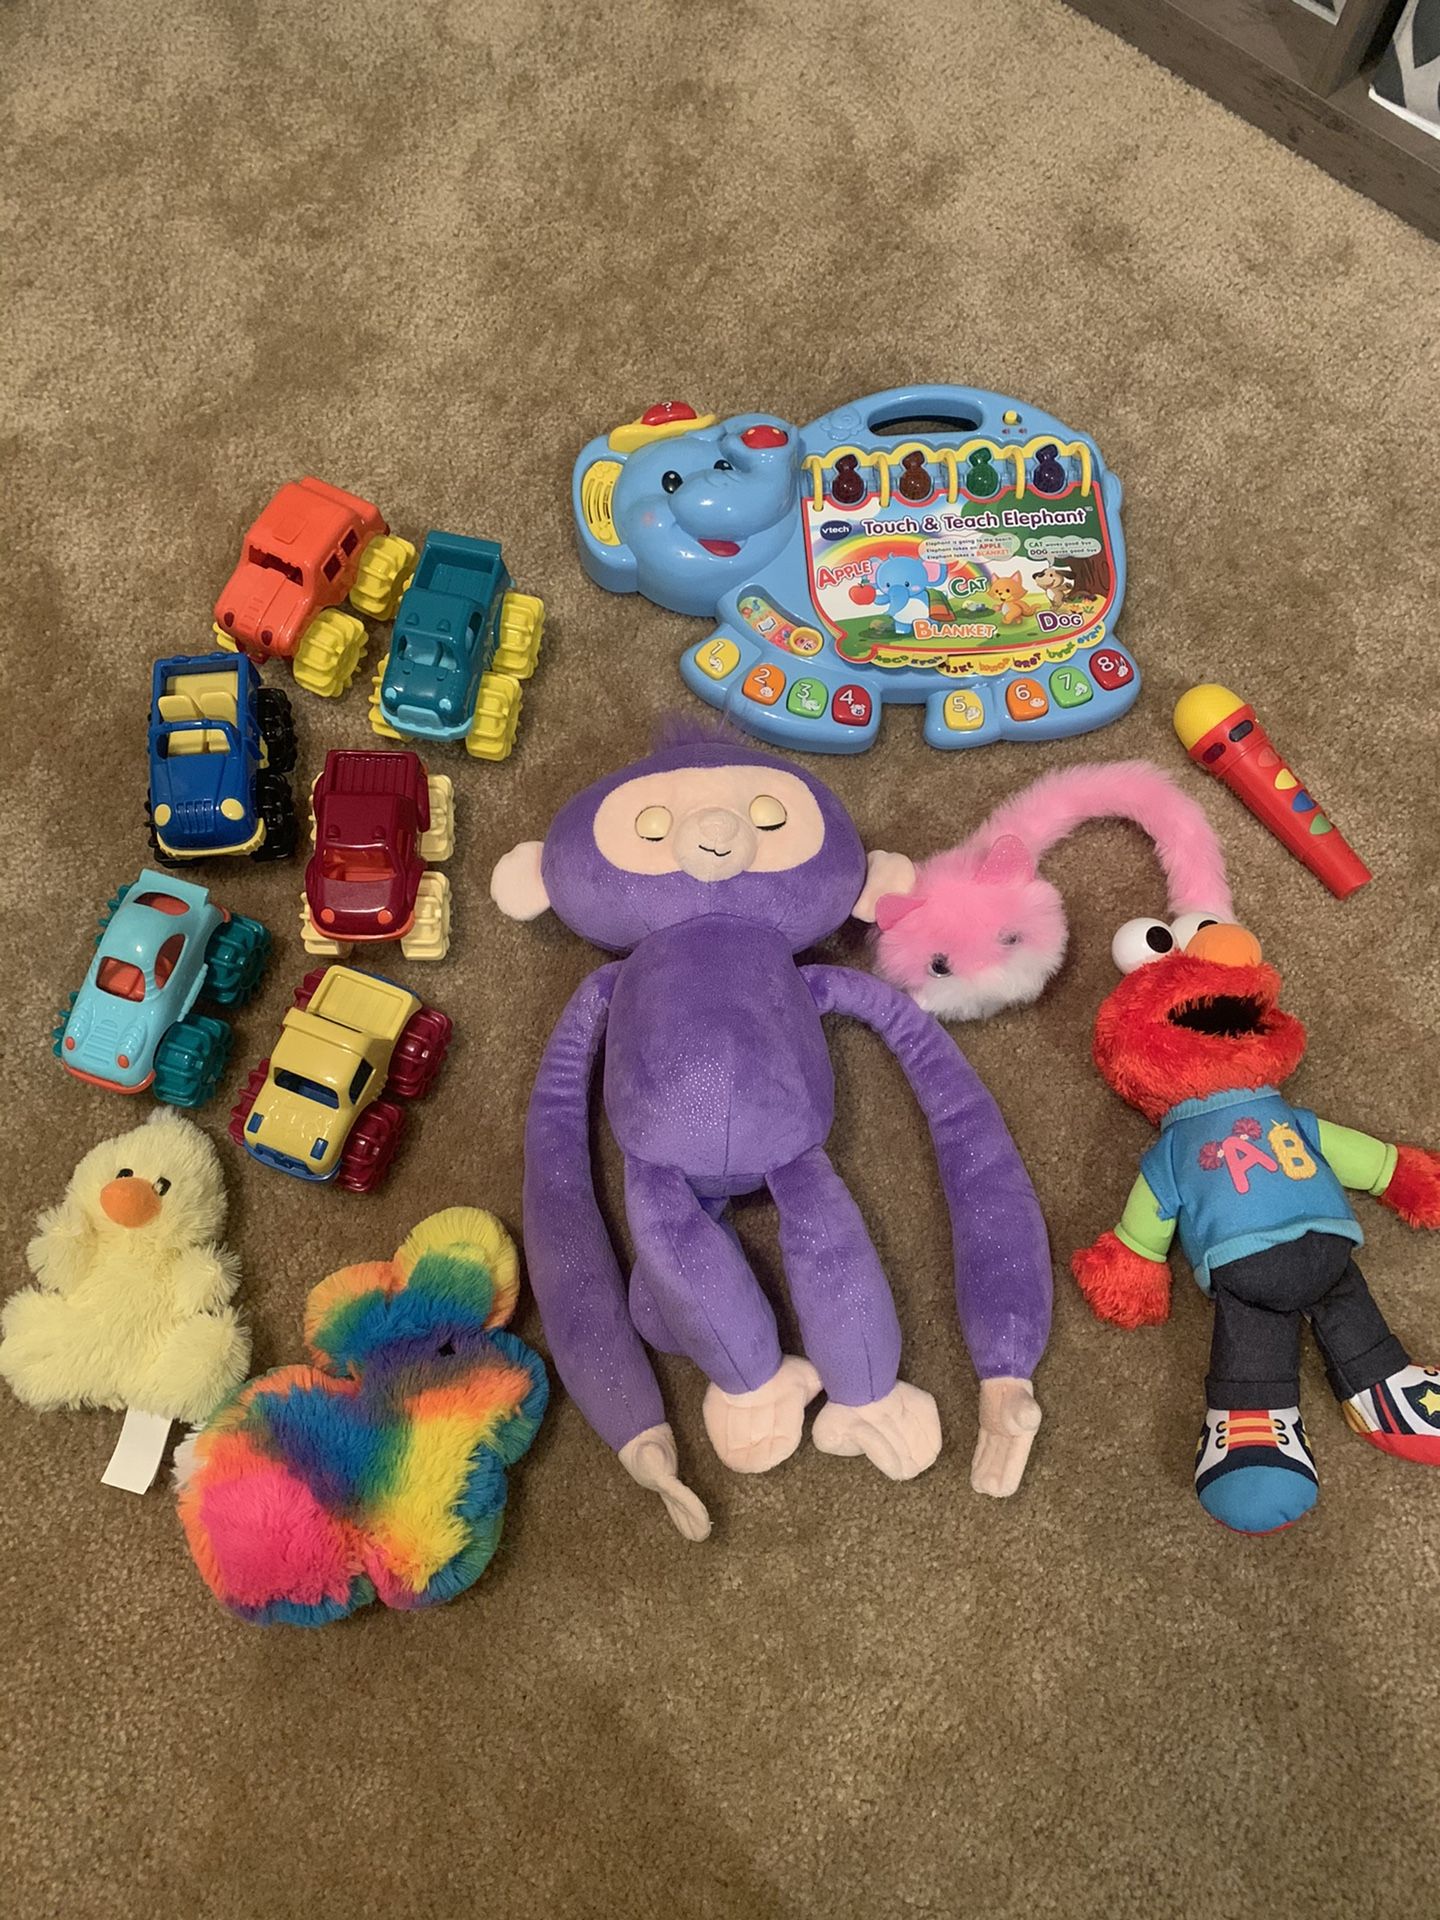 Kids toys